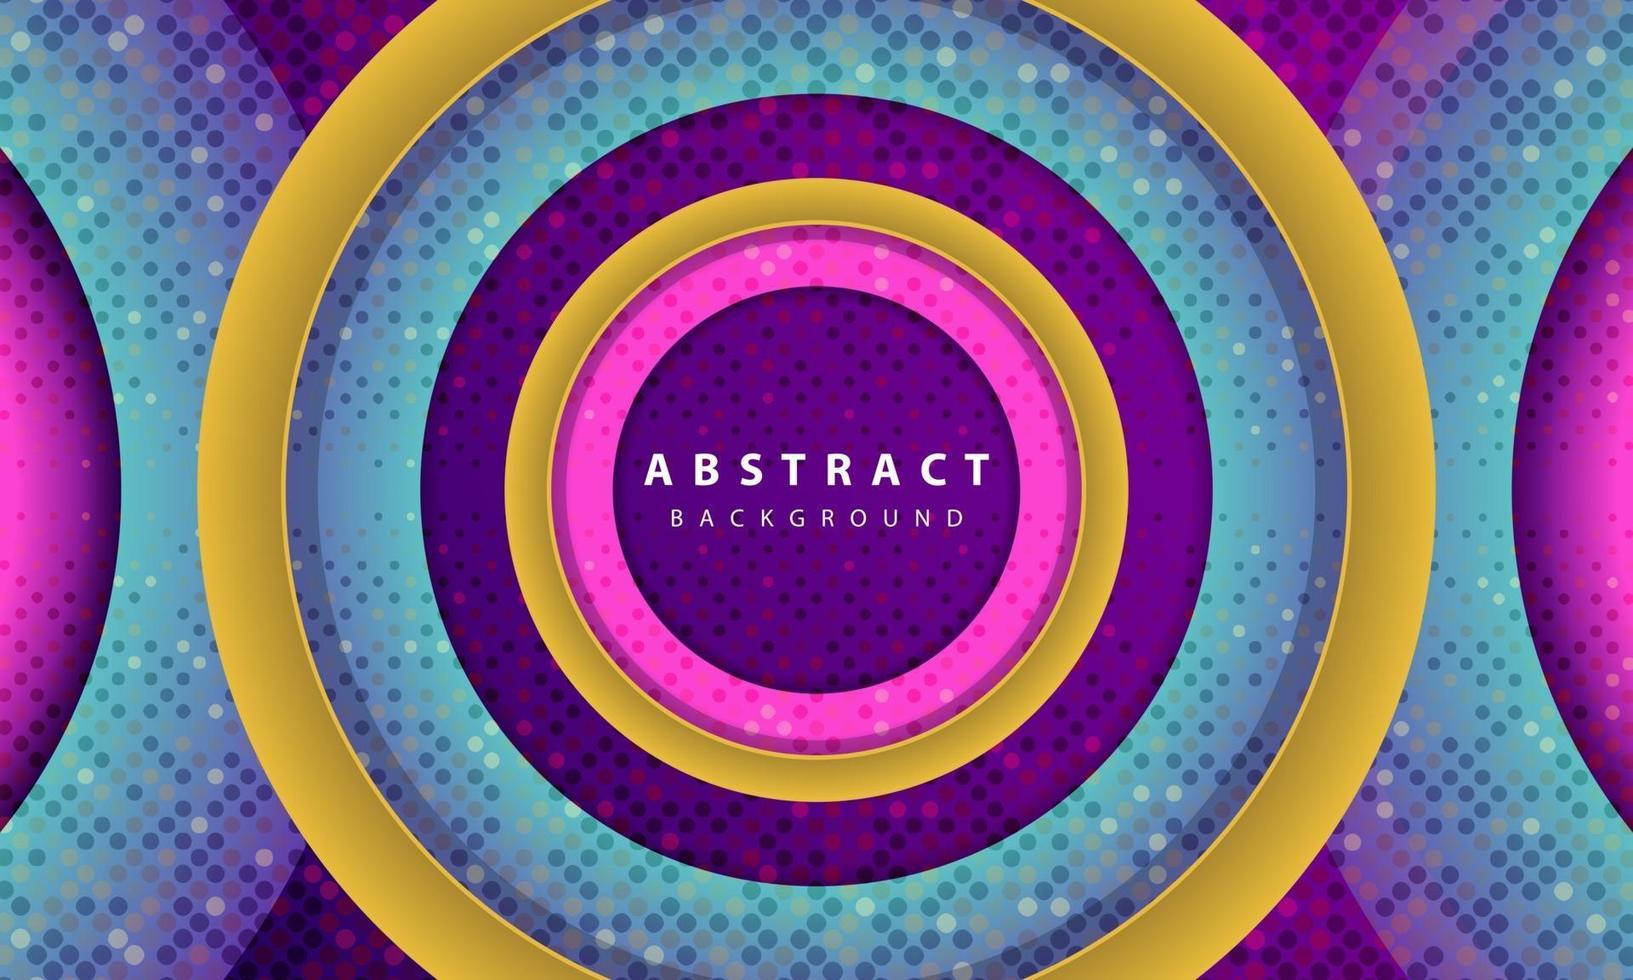 vector de fondo púrpura abstracto moderno. diseño de maquetación con formas dinámicas para eventos deportivos.